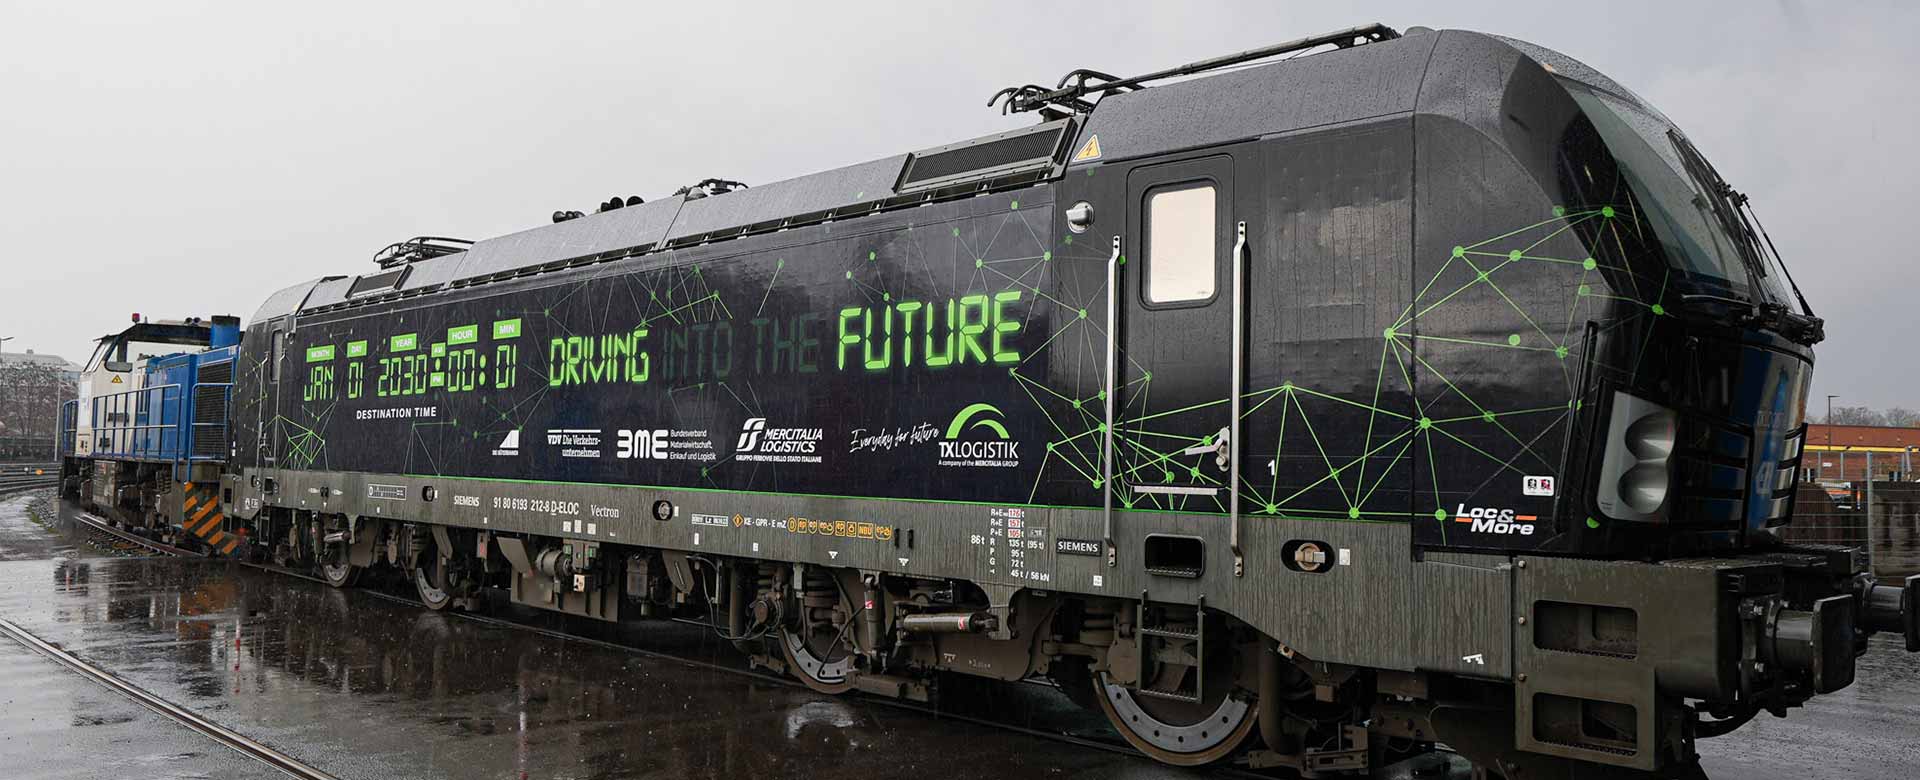 TX Logistik loco obiettivi climatici 2030